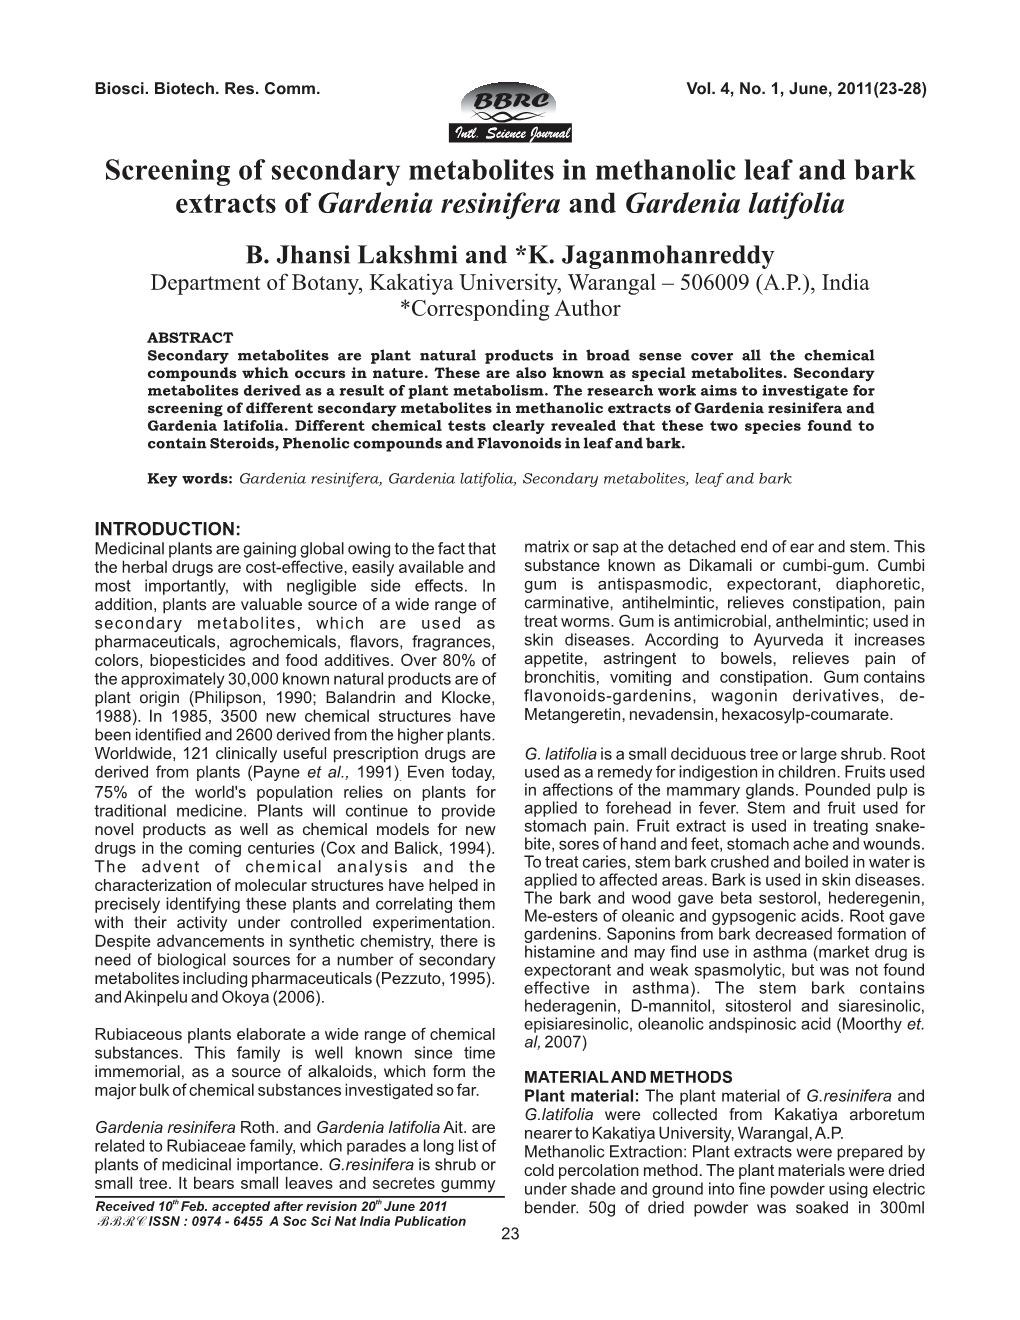 Screening of Secondary Metabolites in Methanolic Leaf and Bark Extracts of Gardenia Resinifera and Gardenia Latifolia B